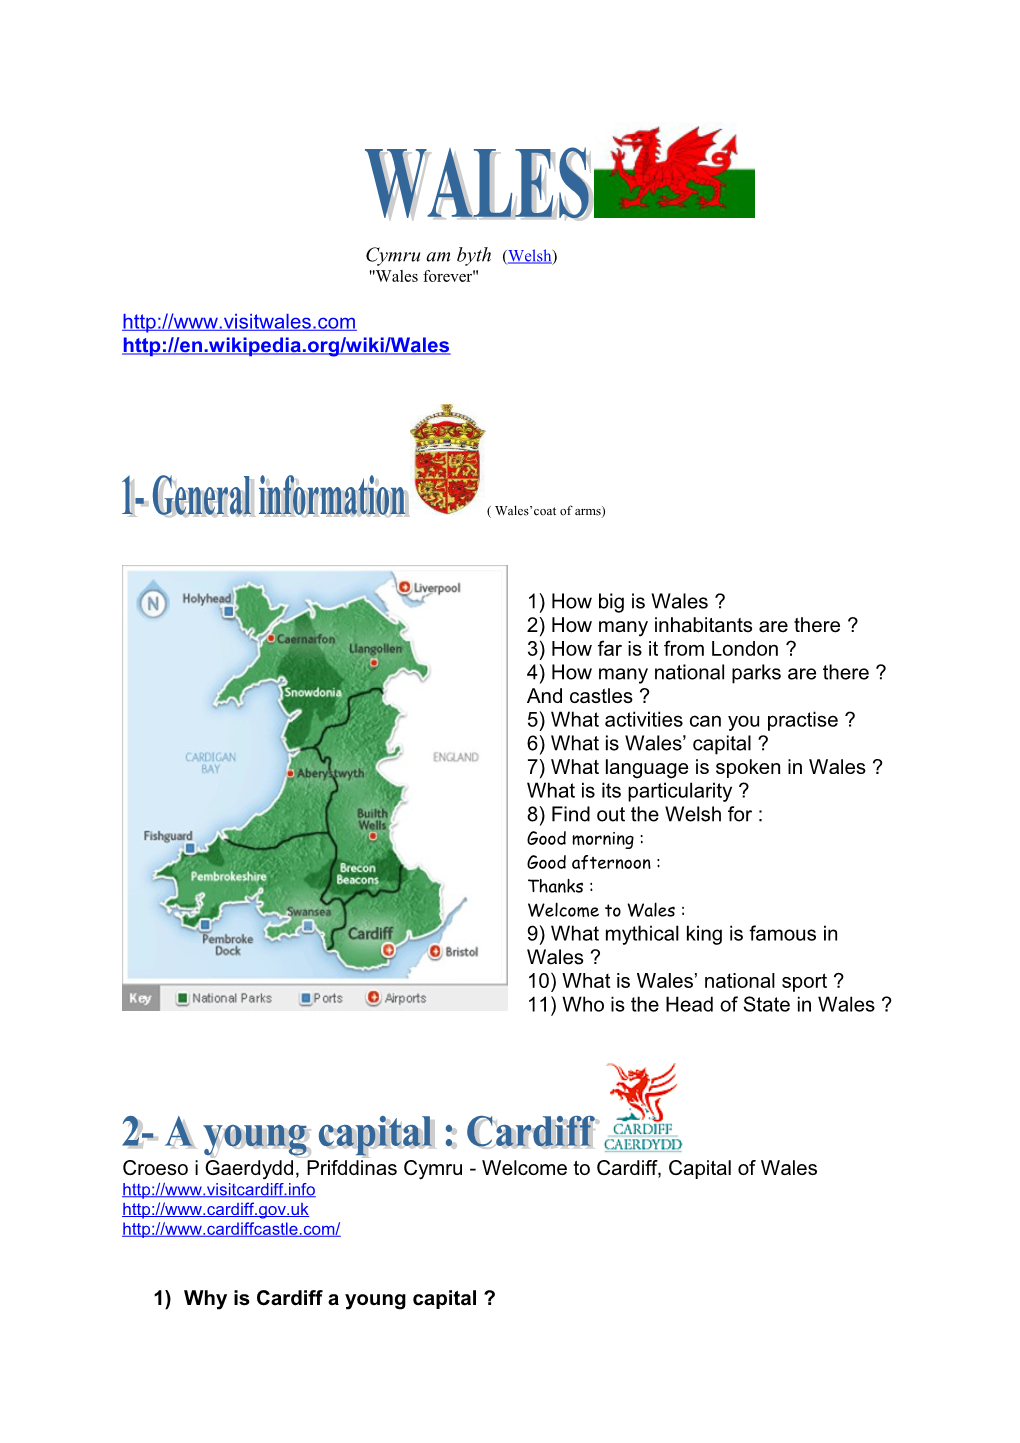 Croeso I Gaerdydd, Prifddinas Cymru - Welcome to Cardiff, Capital of Wales